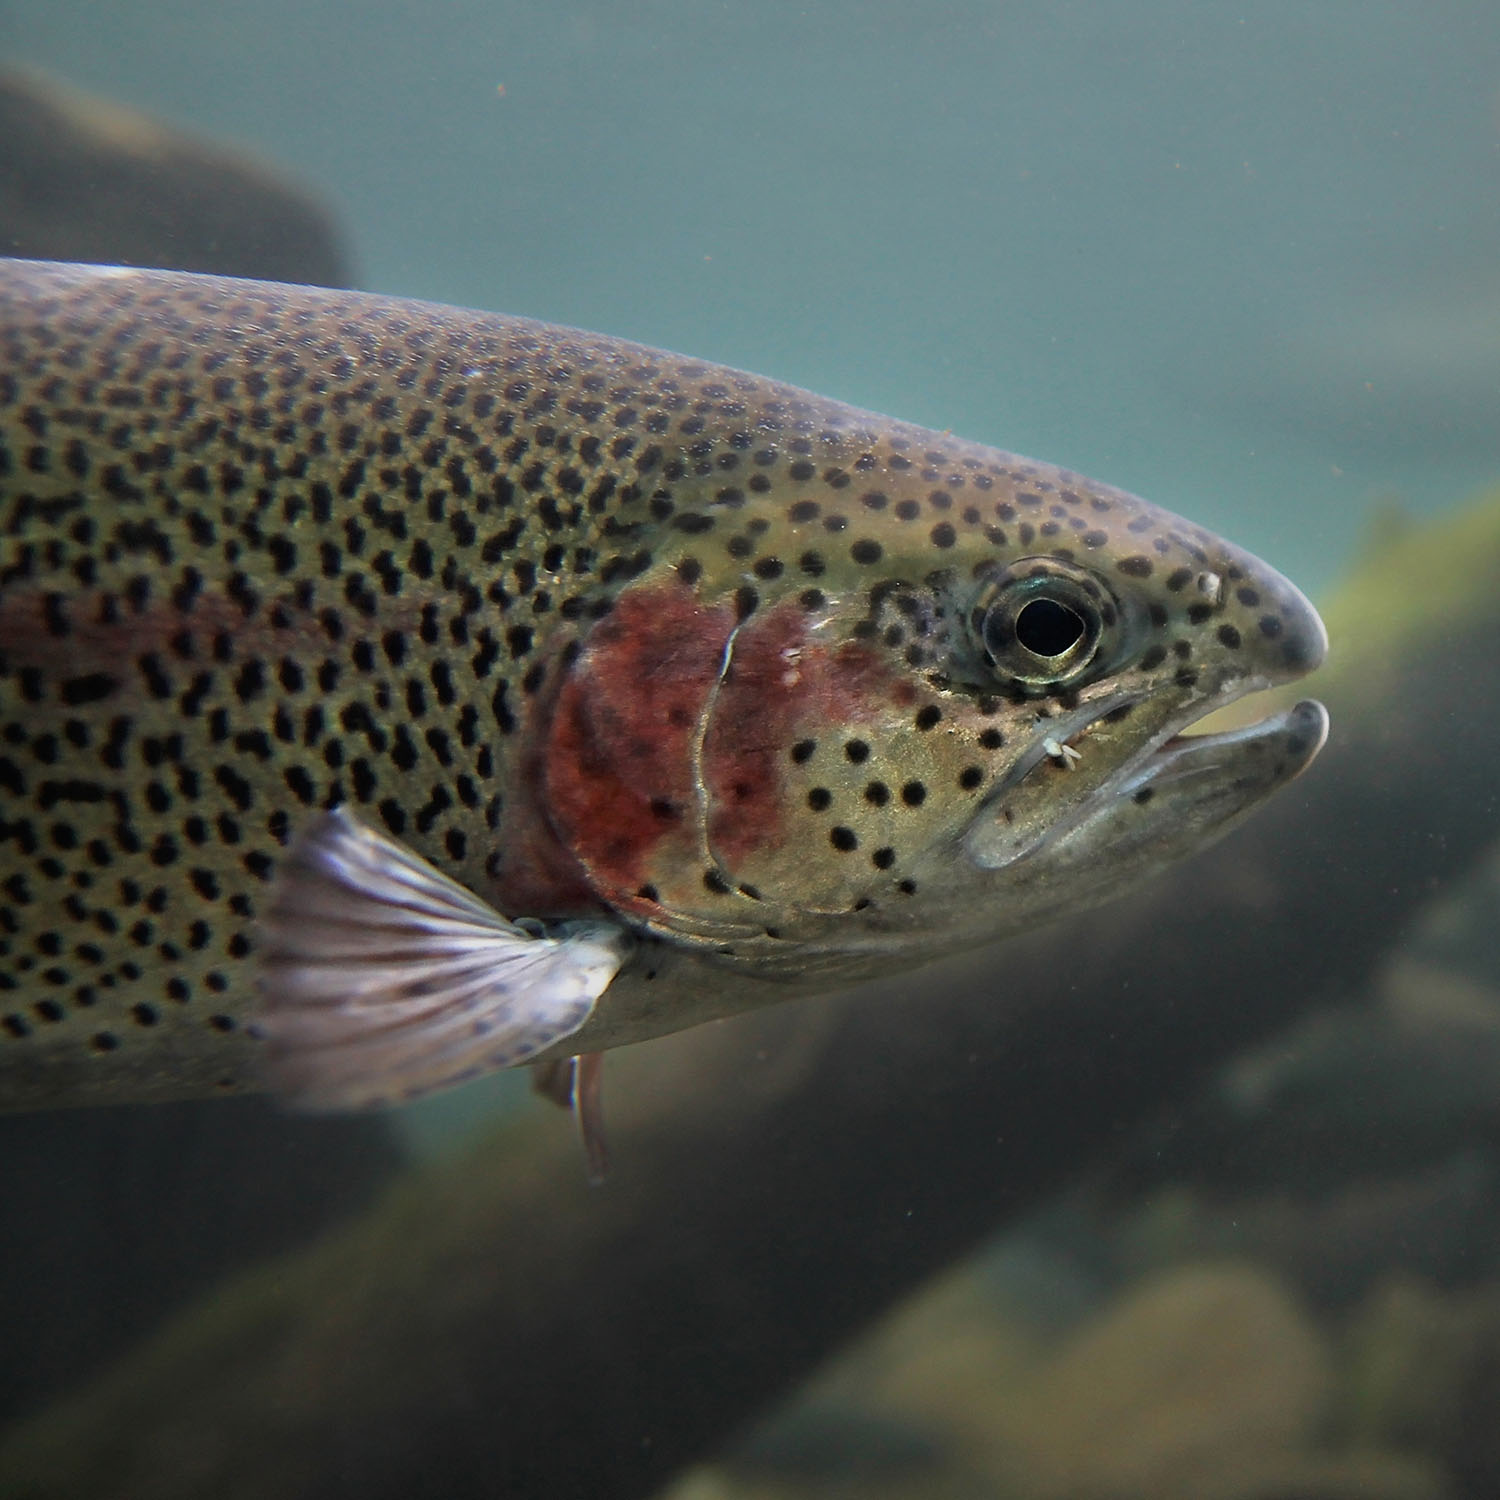 Oregon Senate Hears Fish Welfare Plea, Animal Equality Co-presents